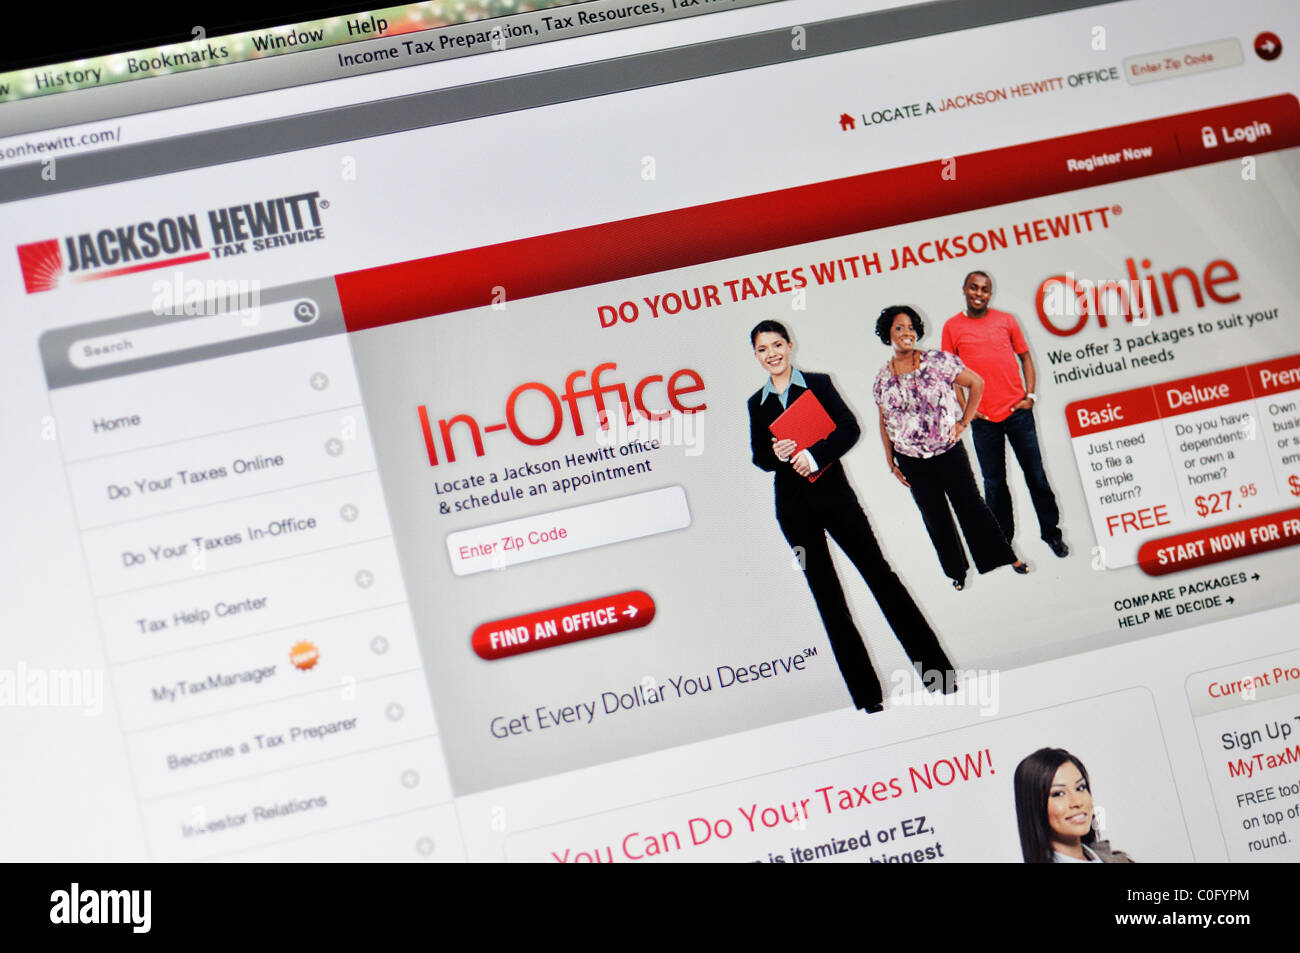 Jackson Hewitt online income tax preparation website Stock Photo